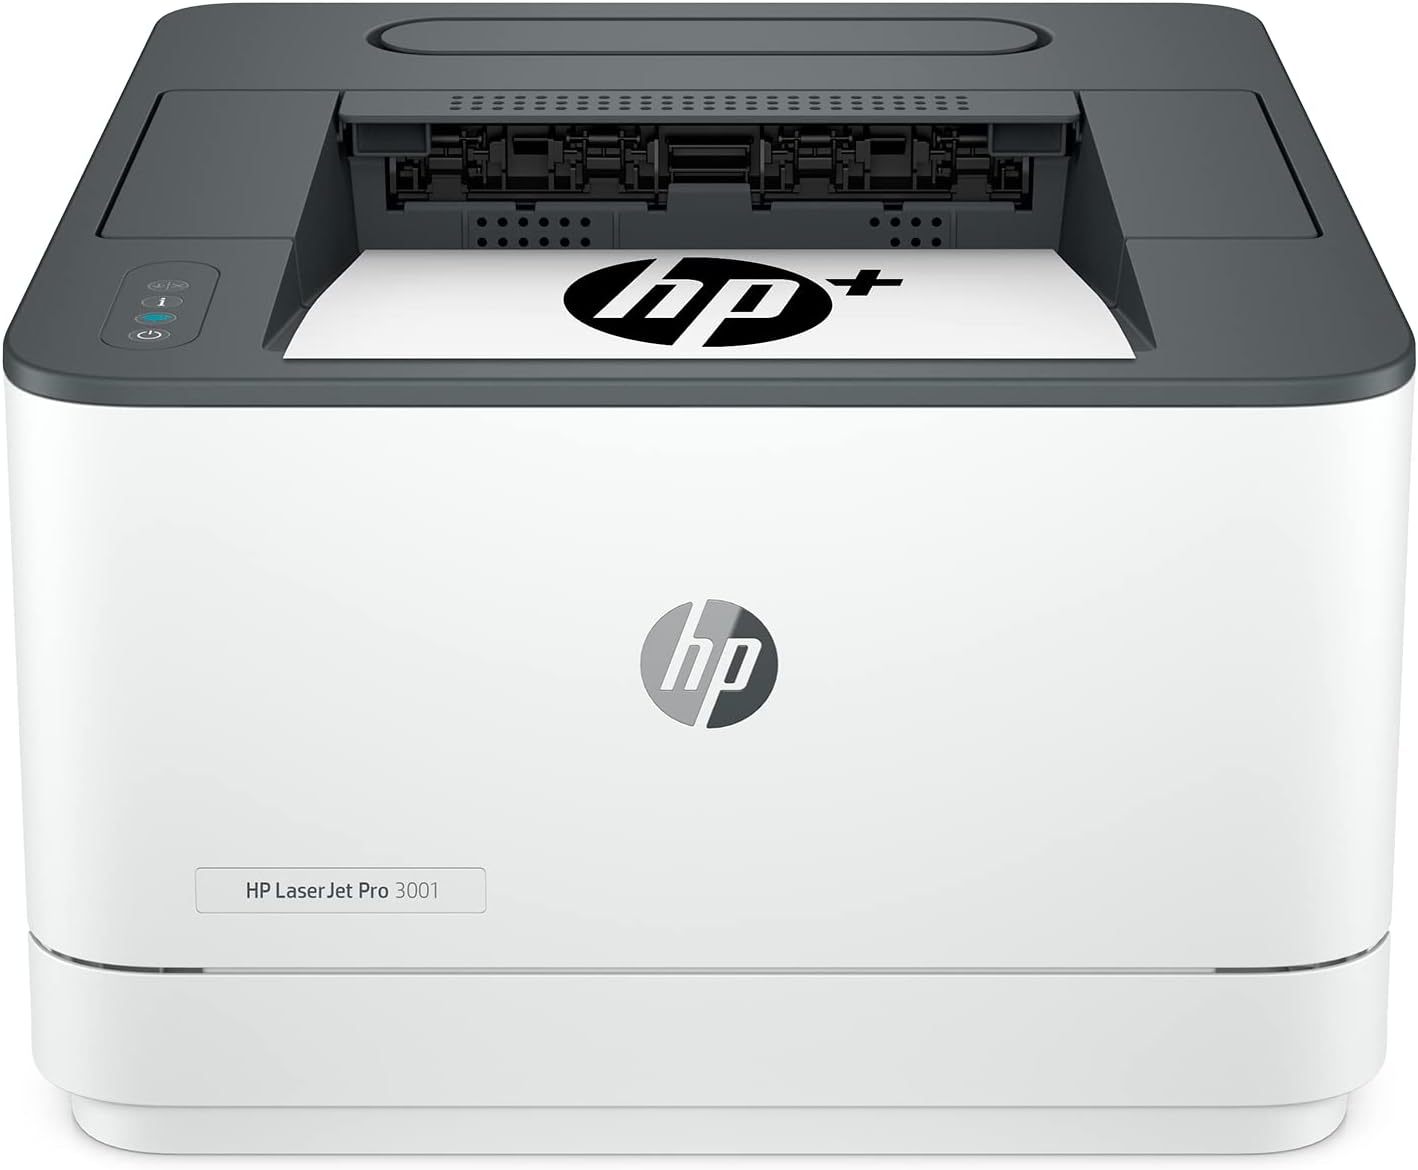 HP LaserJet Pro 3001dwe Wireless Black & White [...]